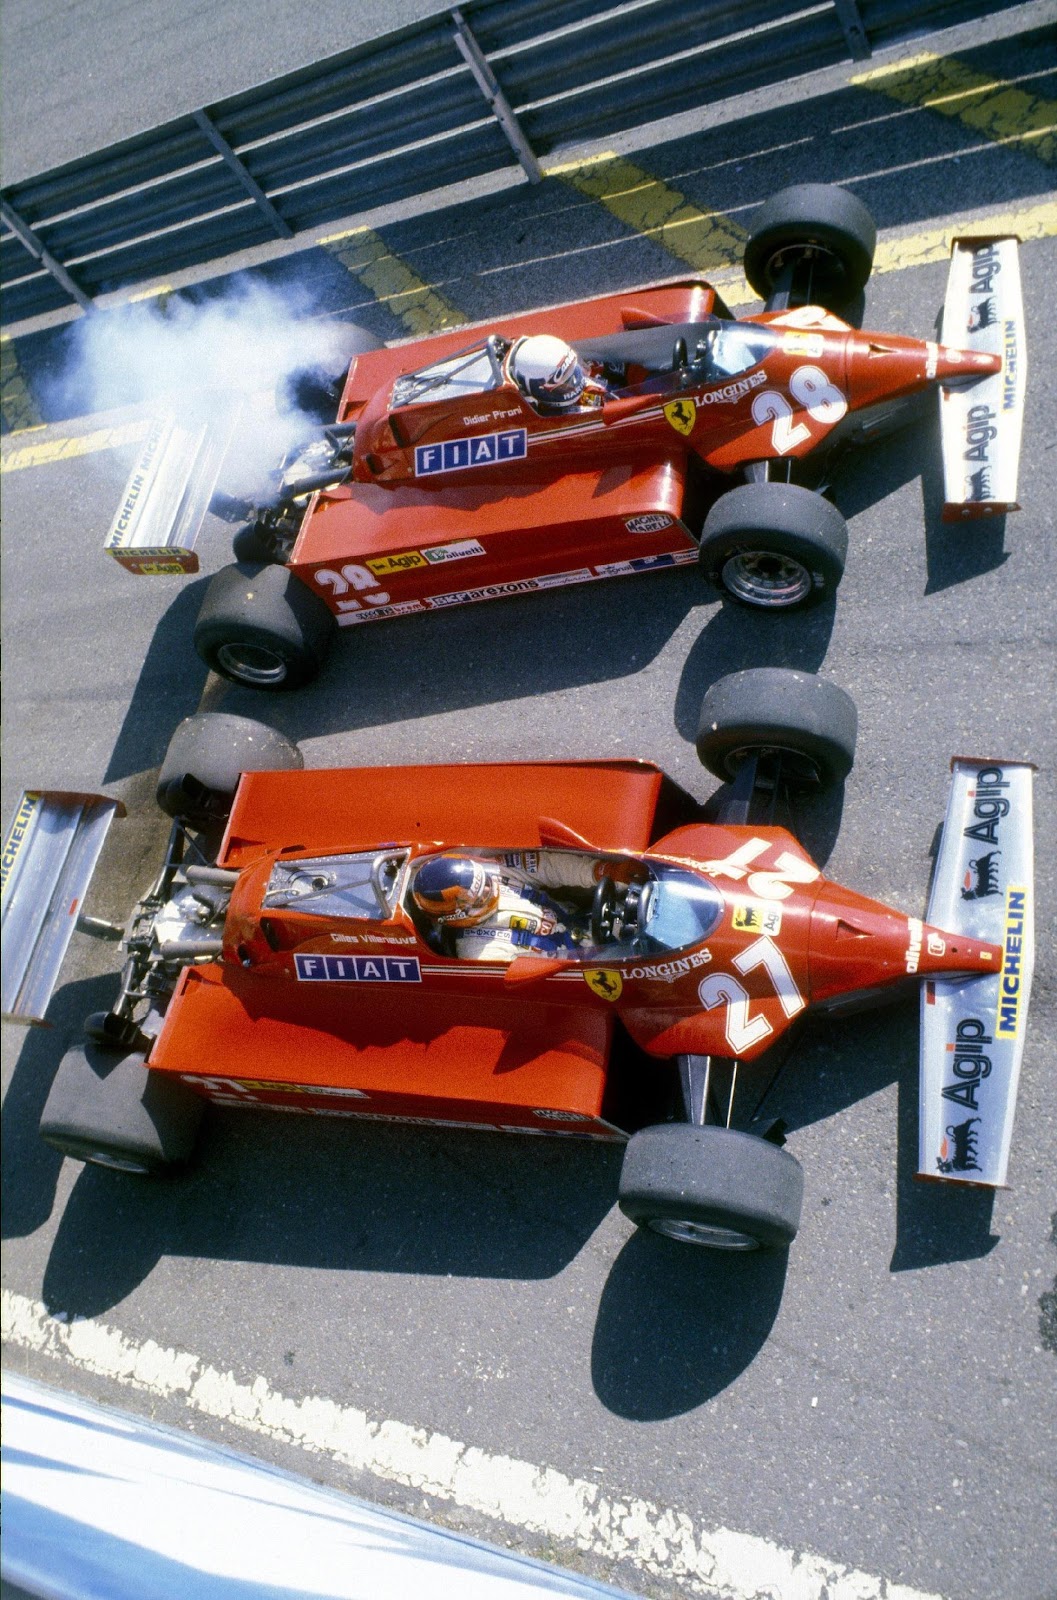 Didier Pironi and Gilles Villeneuve in their Ferraris.